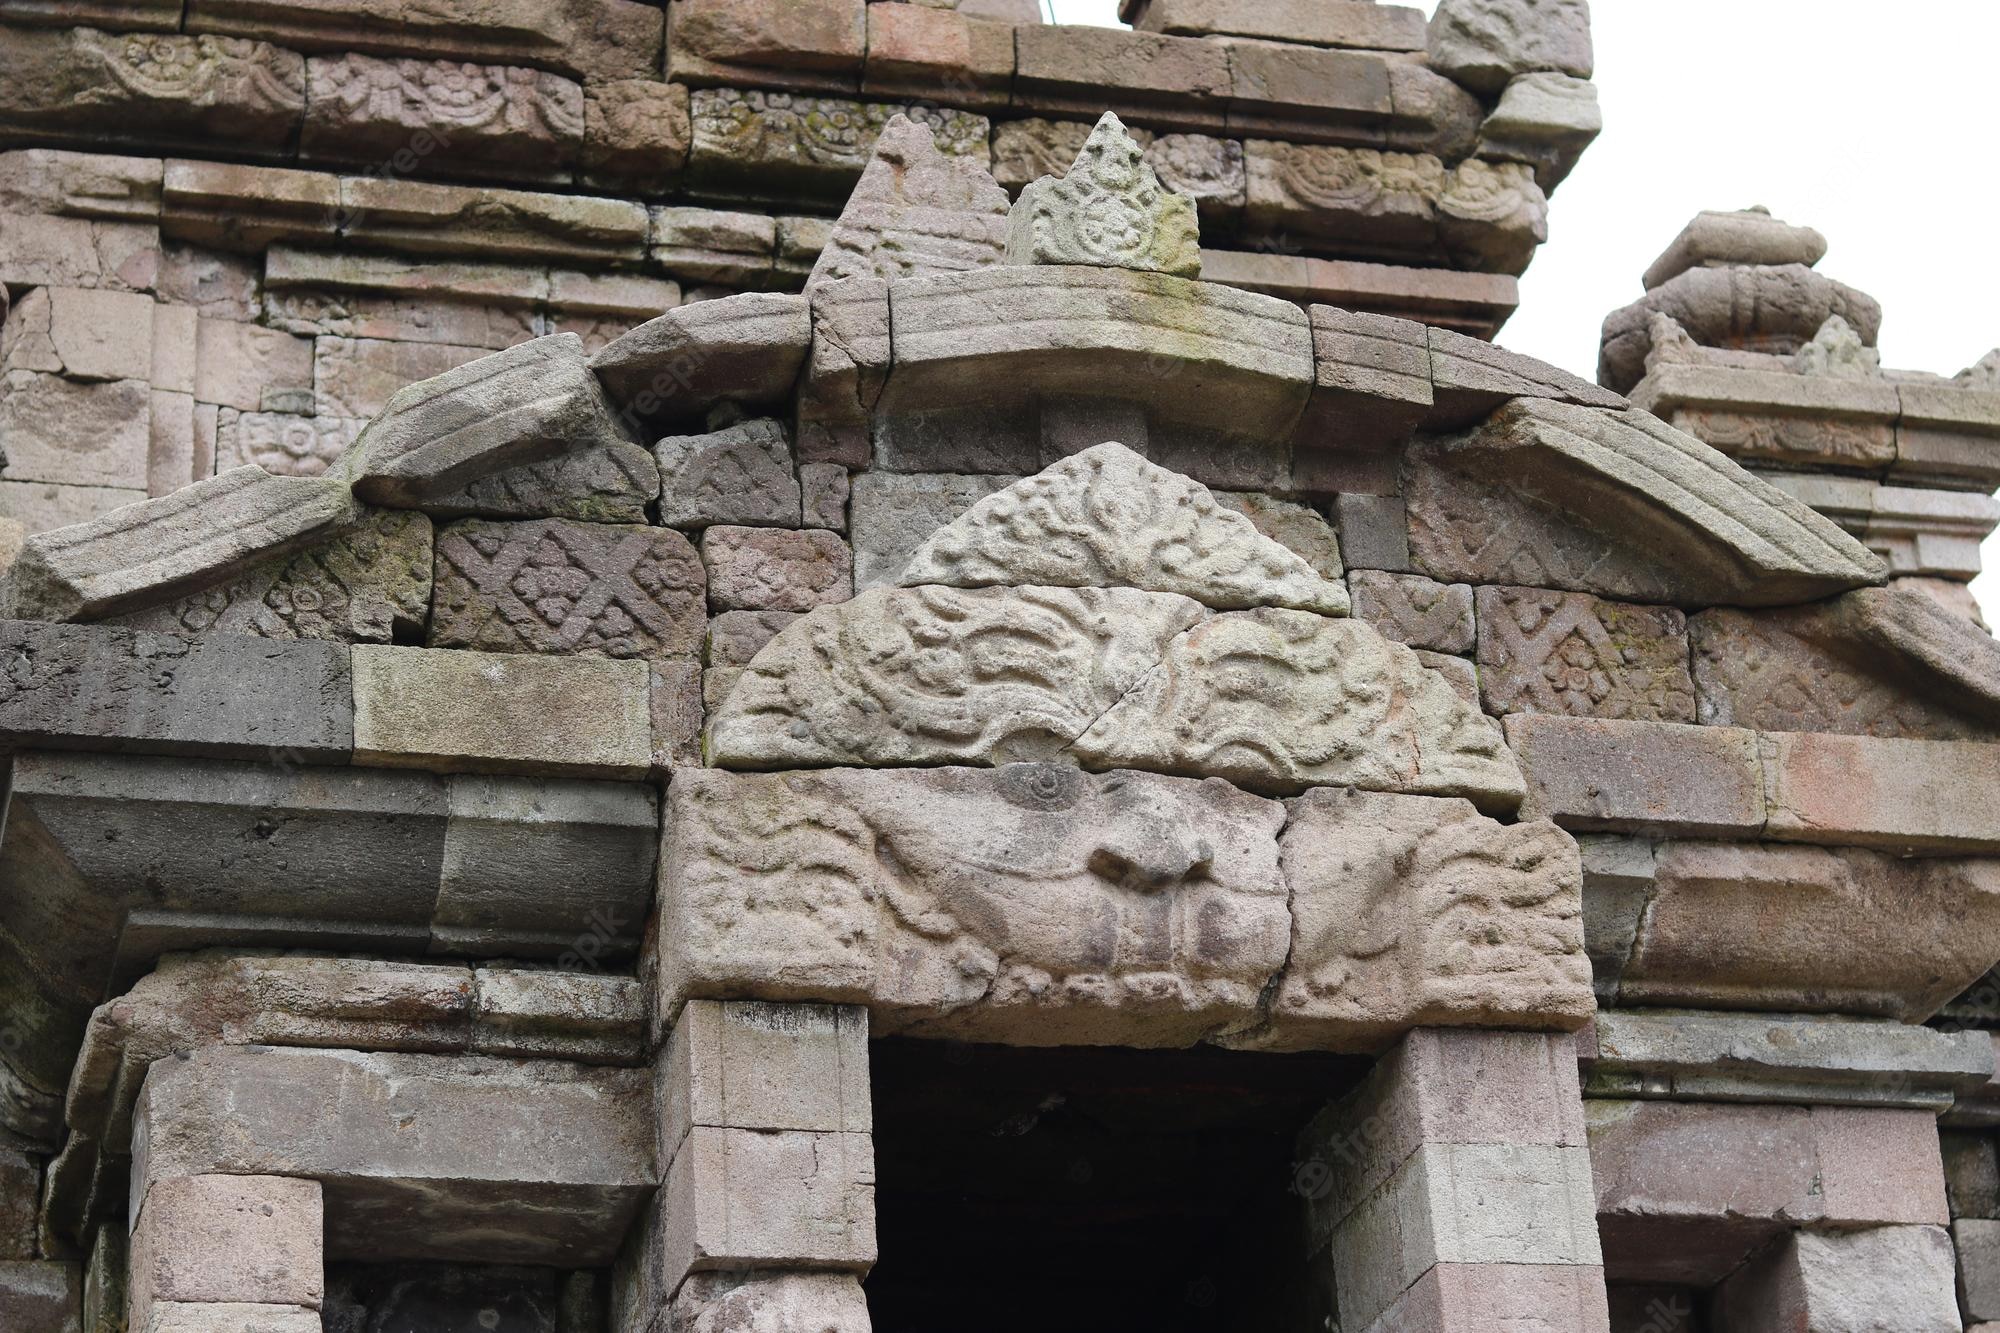 Relief Candi Wisata alam dan sejarah Candi Gedong Songo Semarang Jawa Tengah